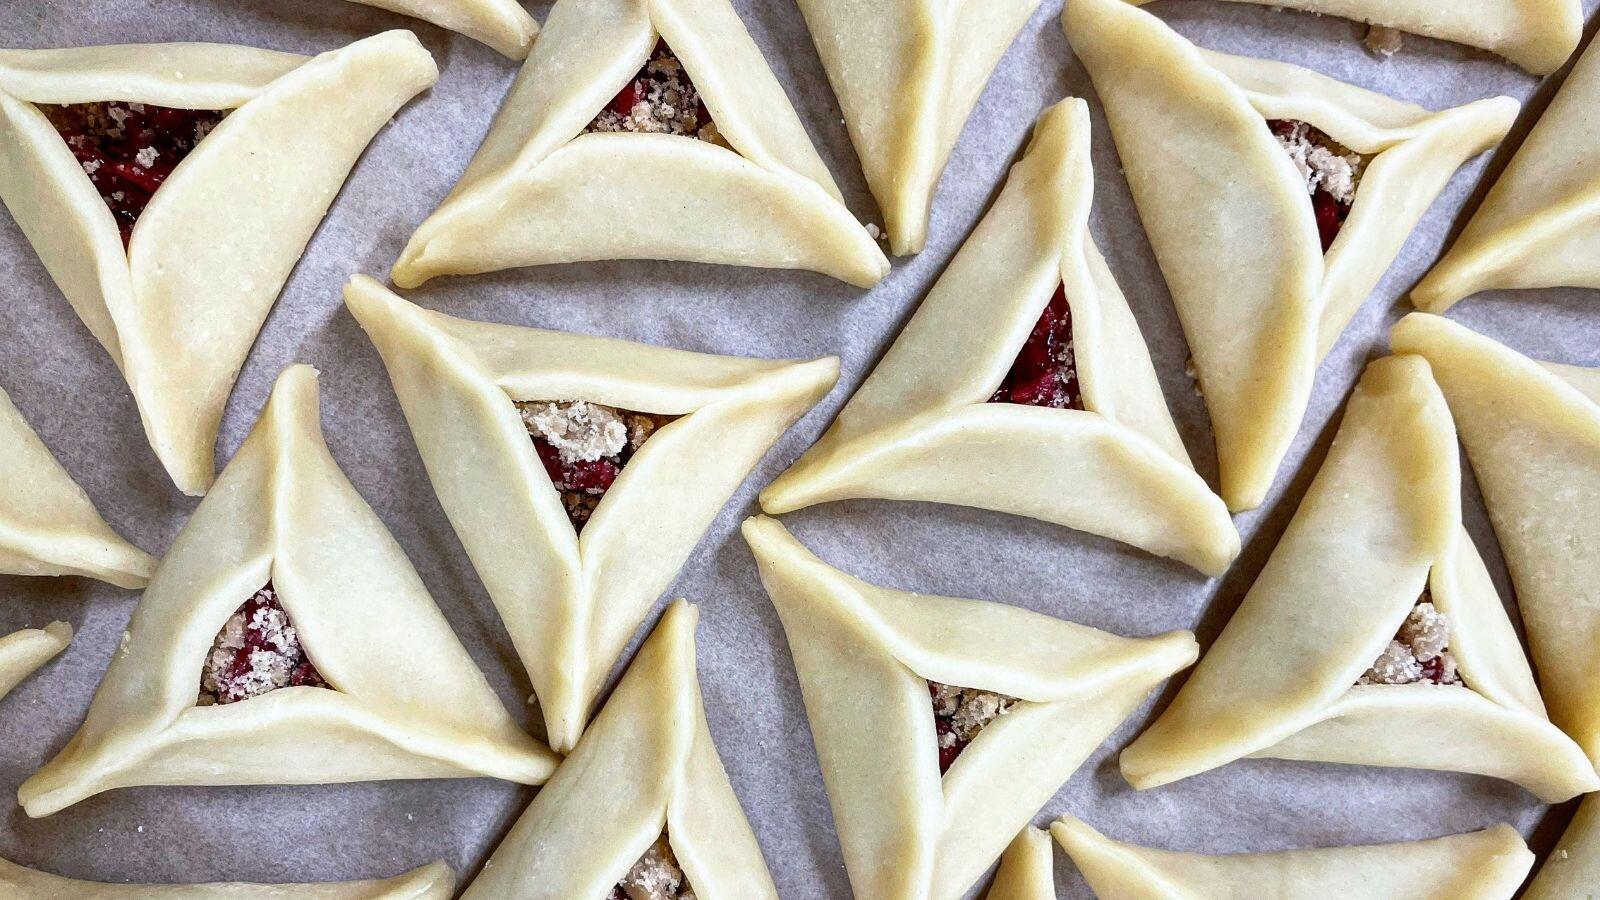 To Help Ukraine, These Jewish Bakers Are Making Hamantaschen | The Nosher